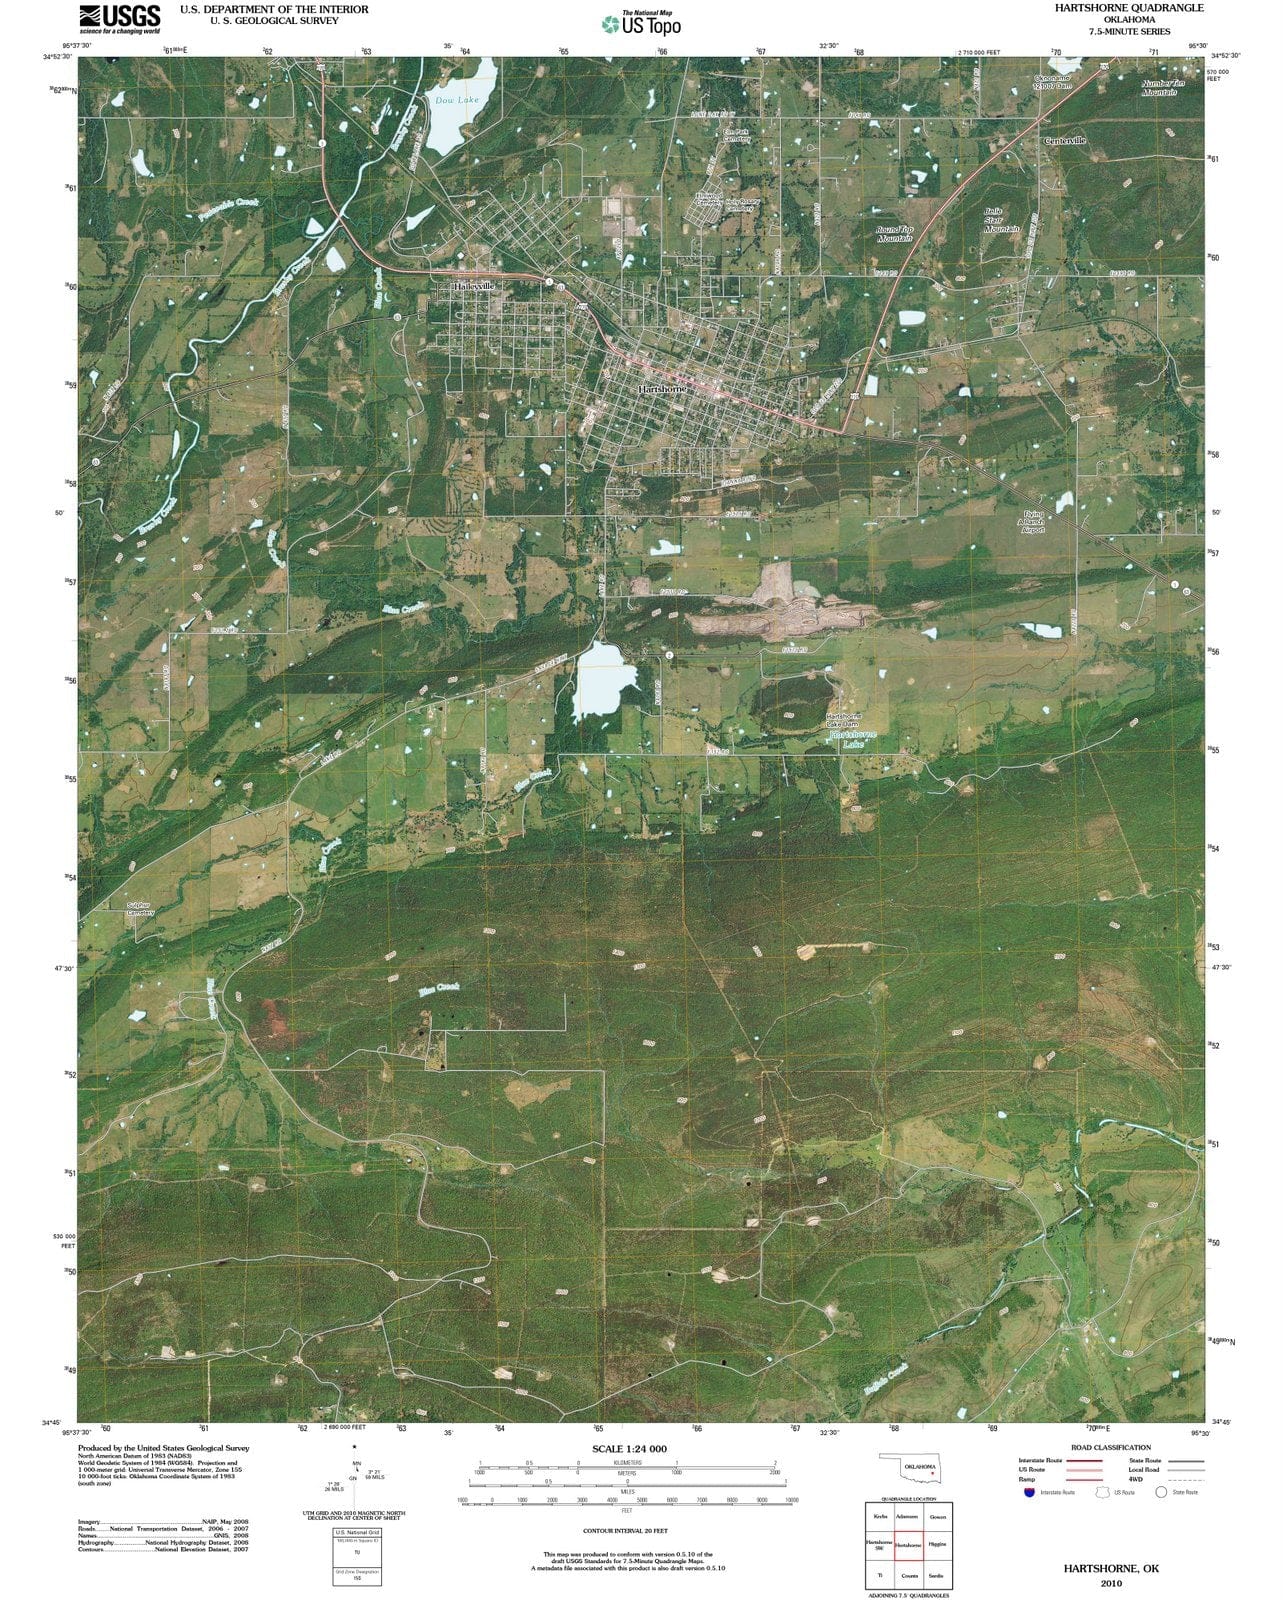 2010 Hartshorne, OK - Oklahoma - USGS Topographic Map